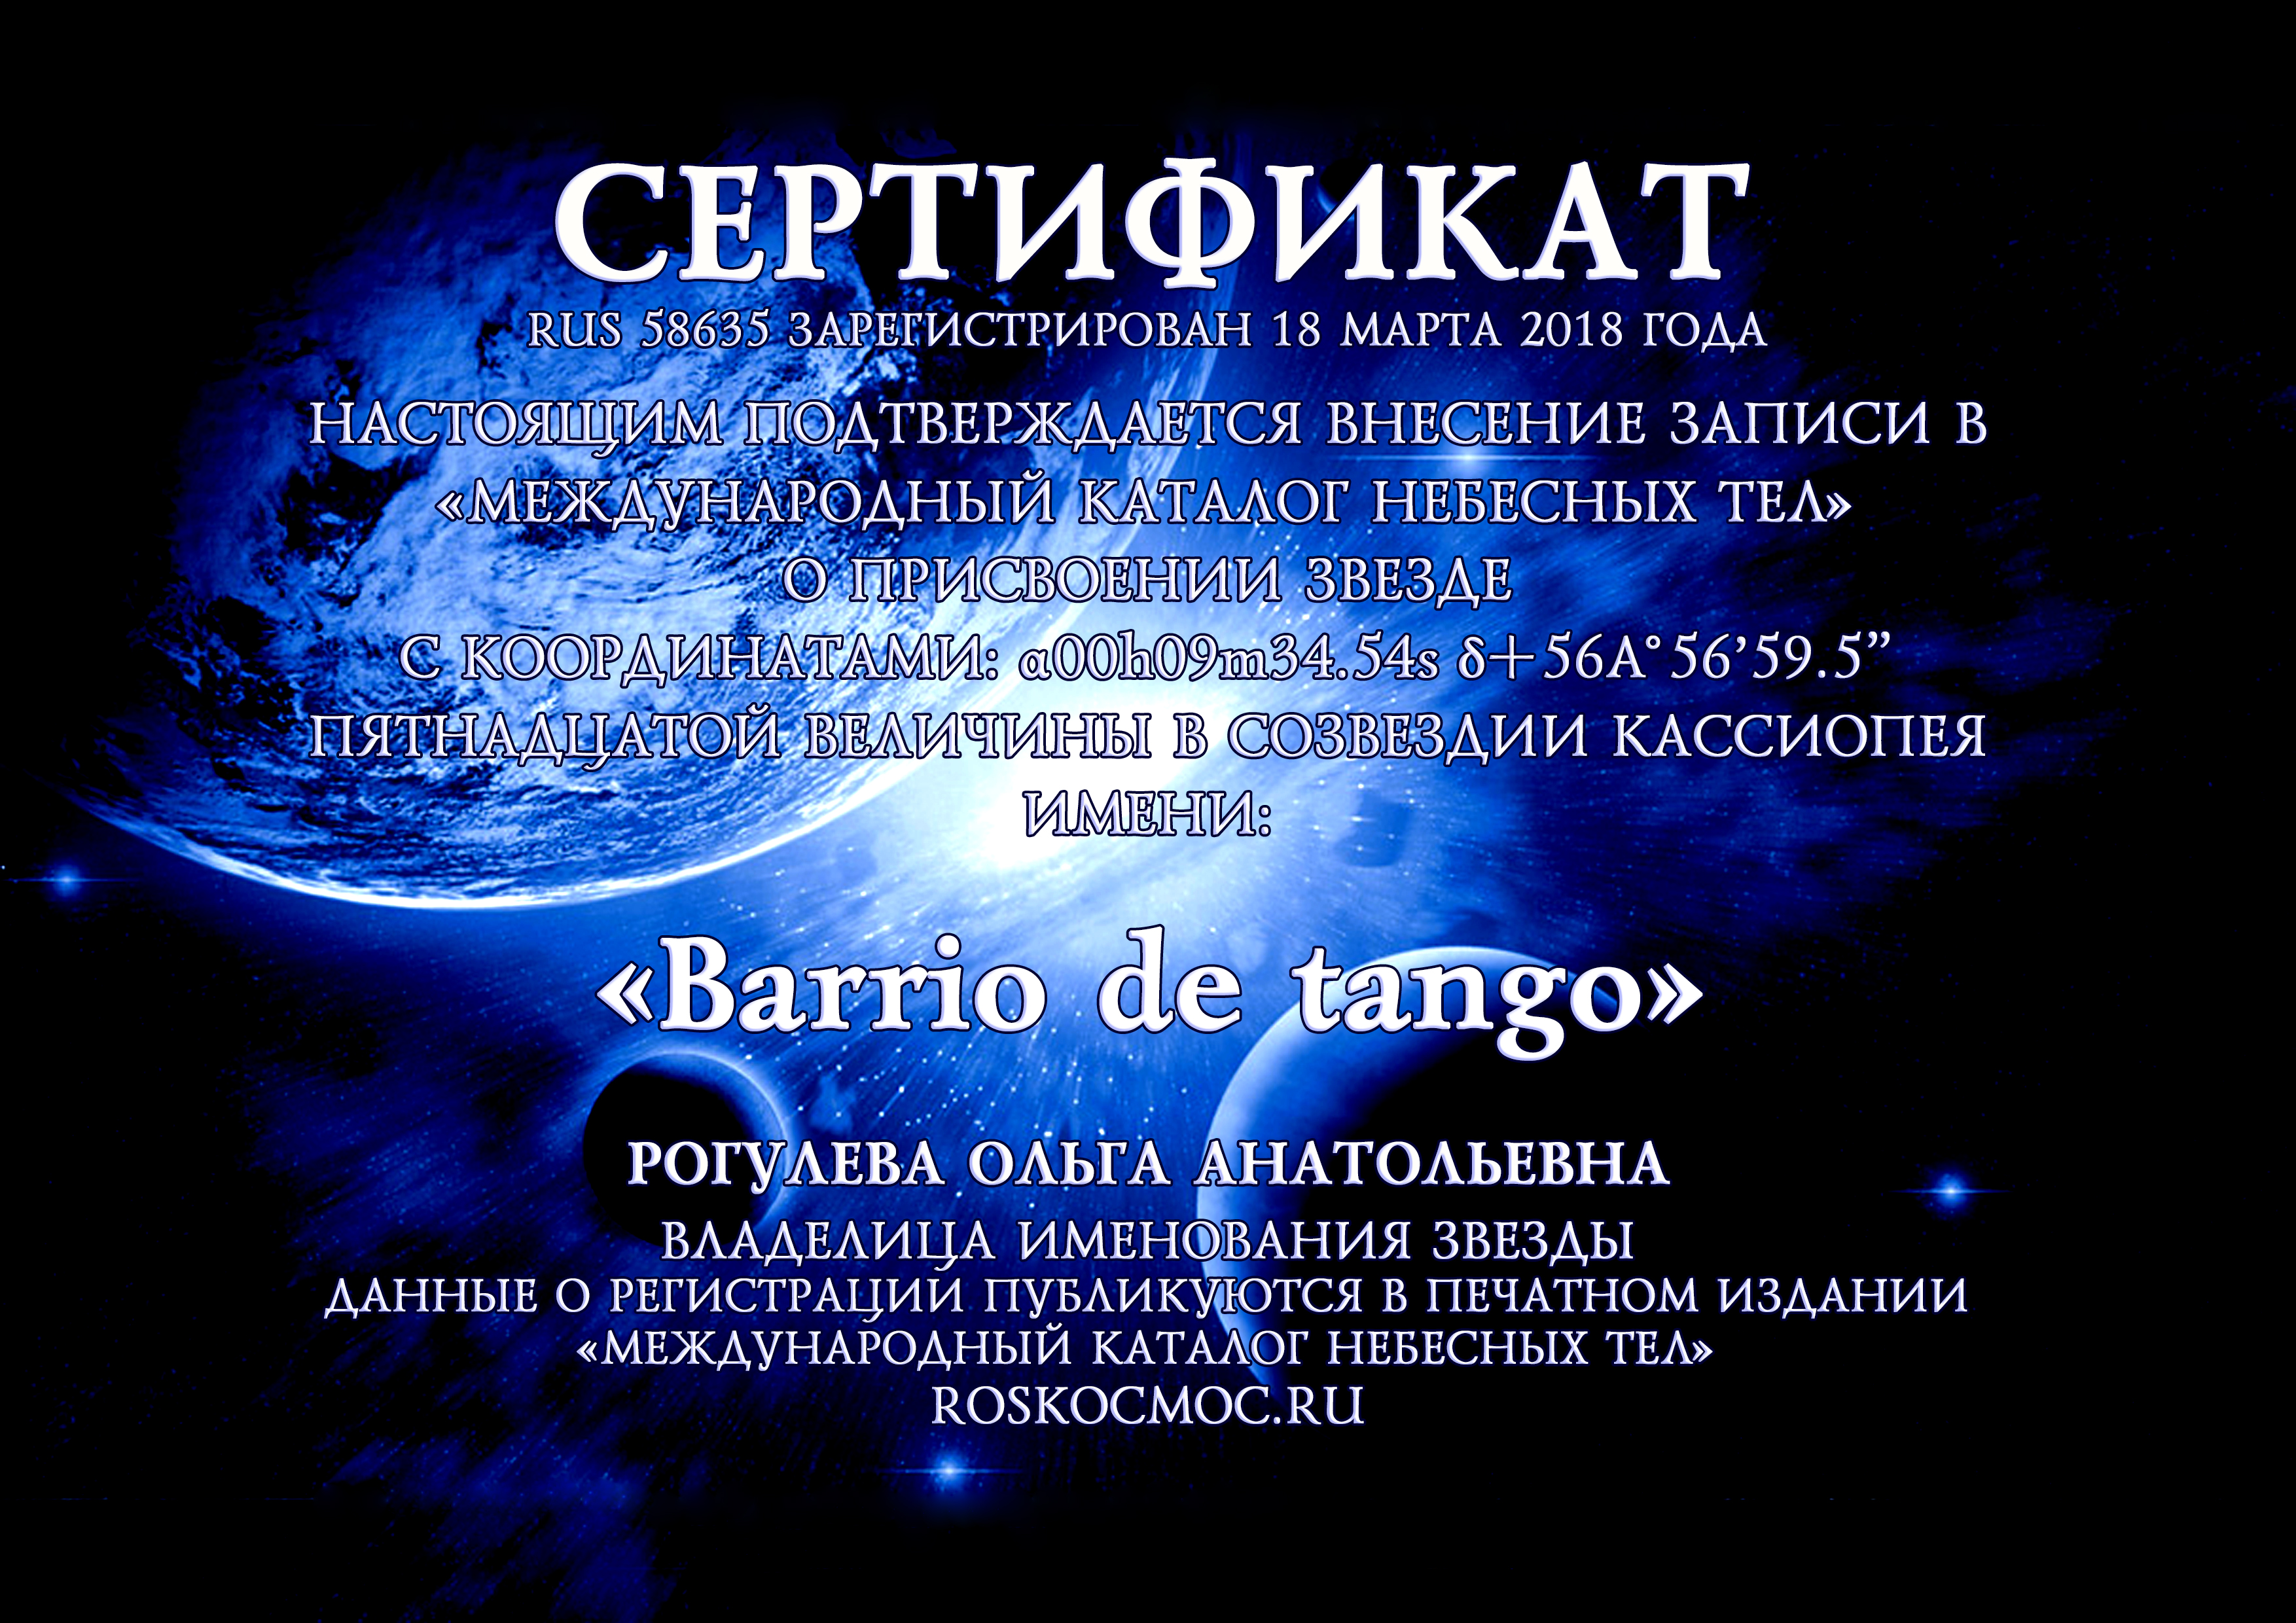 сертификат на присвоение звезде имени Клуба аргентинского танго в Орле "Barrio de tango"